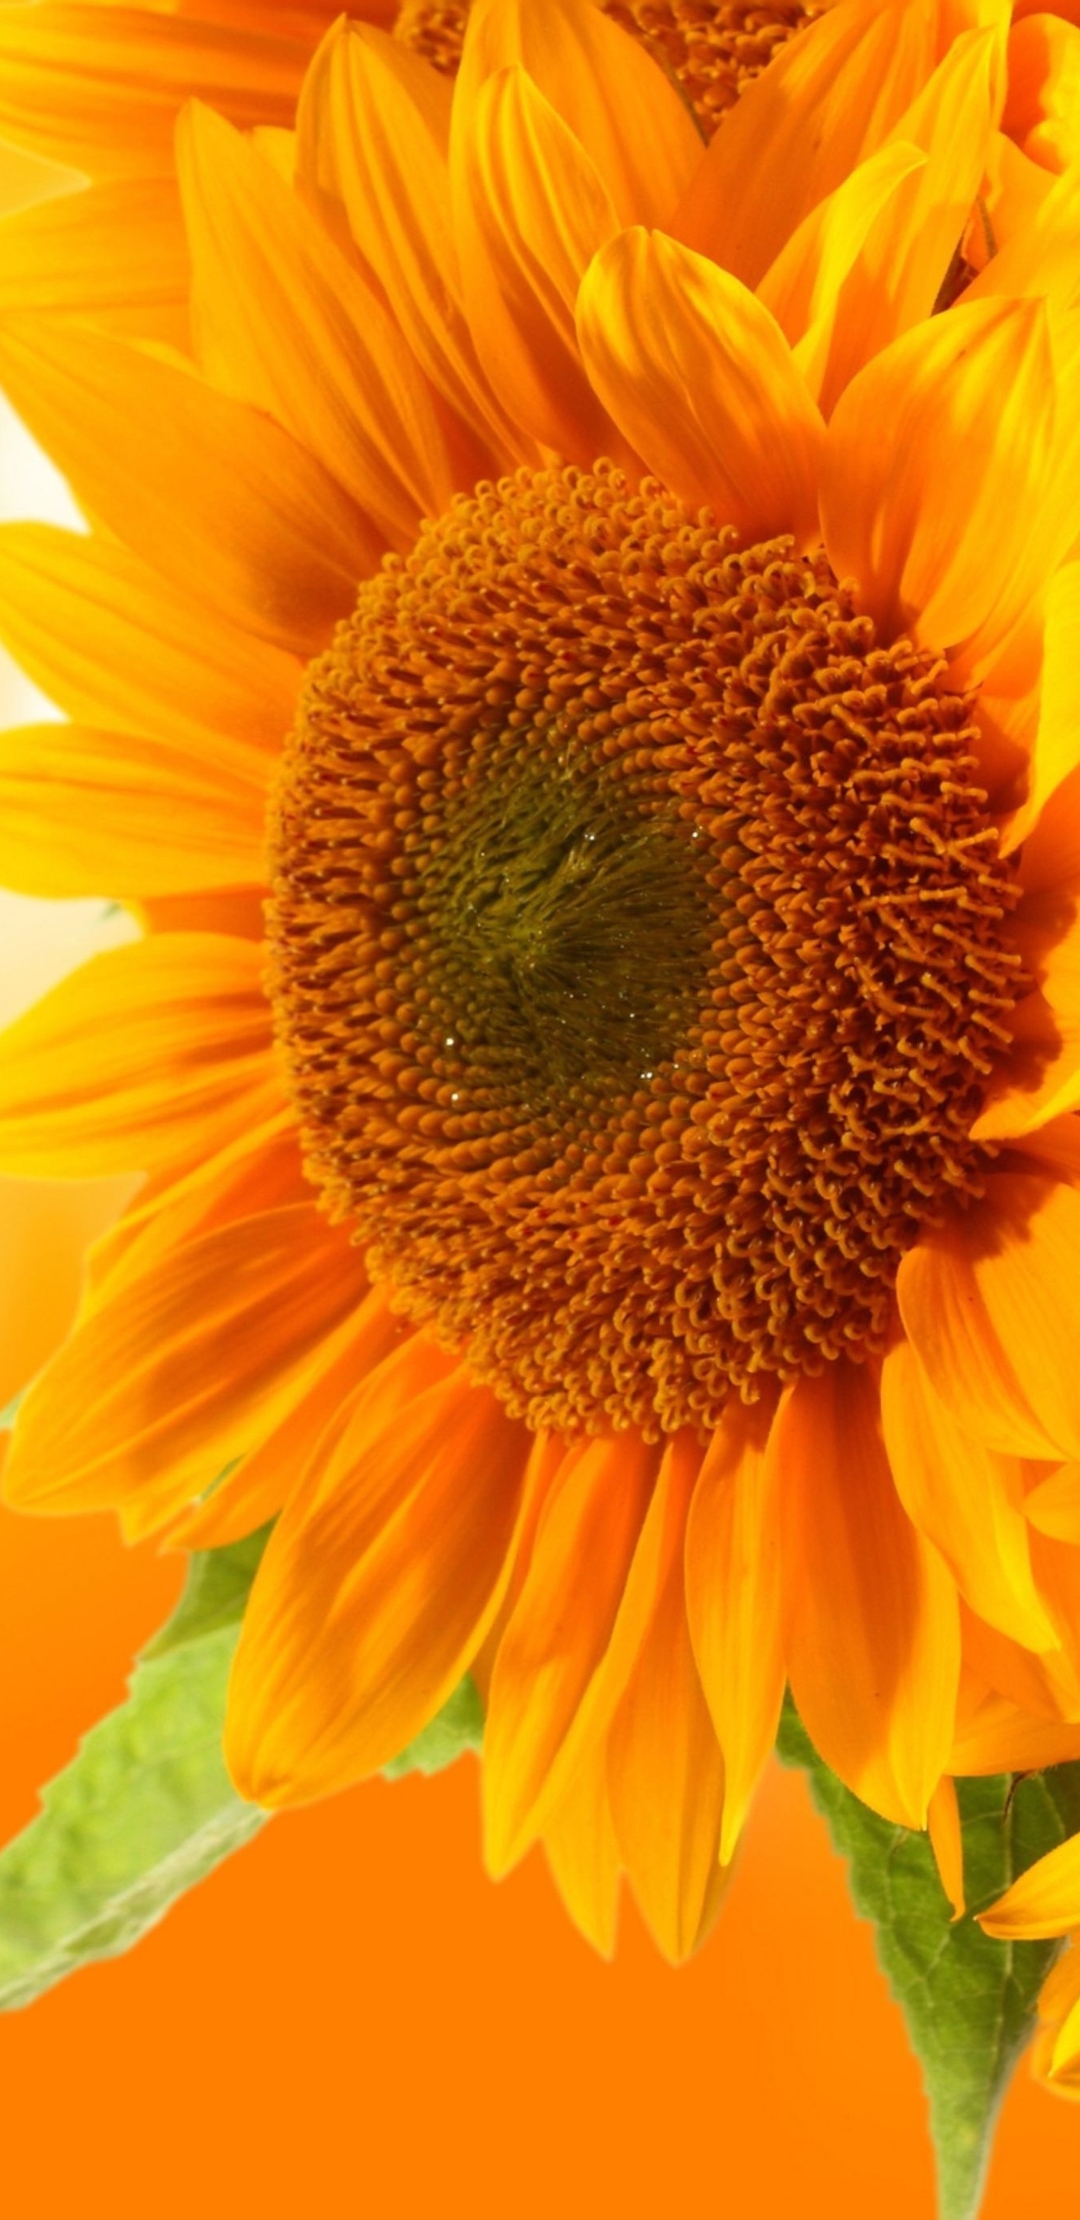 Image: Sunflower, flowers, yellow, bokeh, background